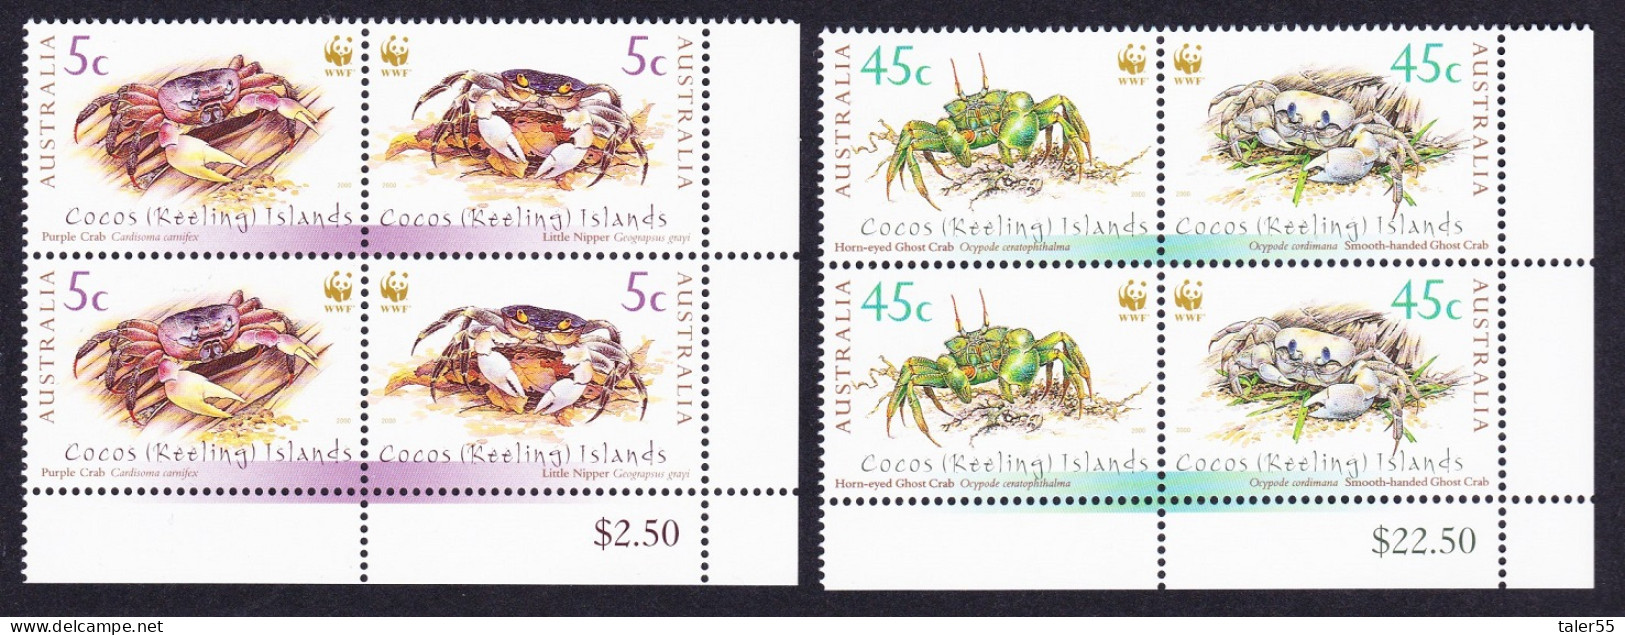 Cocos (Keeling) Is. WWF Crabs Pairs Corner Blocks 2000 MNH SG#389-392 MI#400-403 Sc#333-334 A-b - Kokosinseln (Keeling Islands)